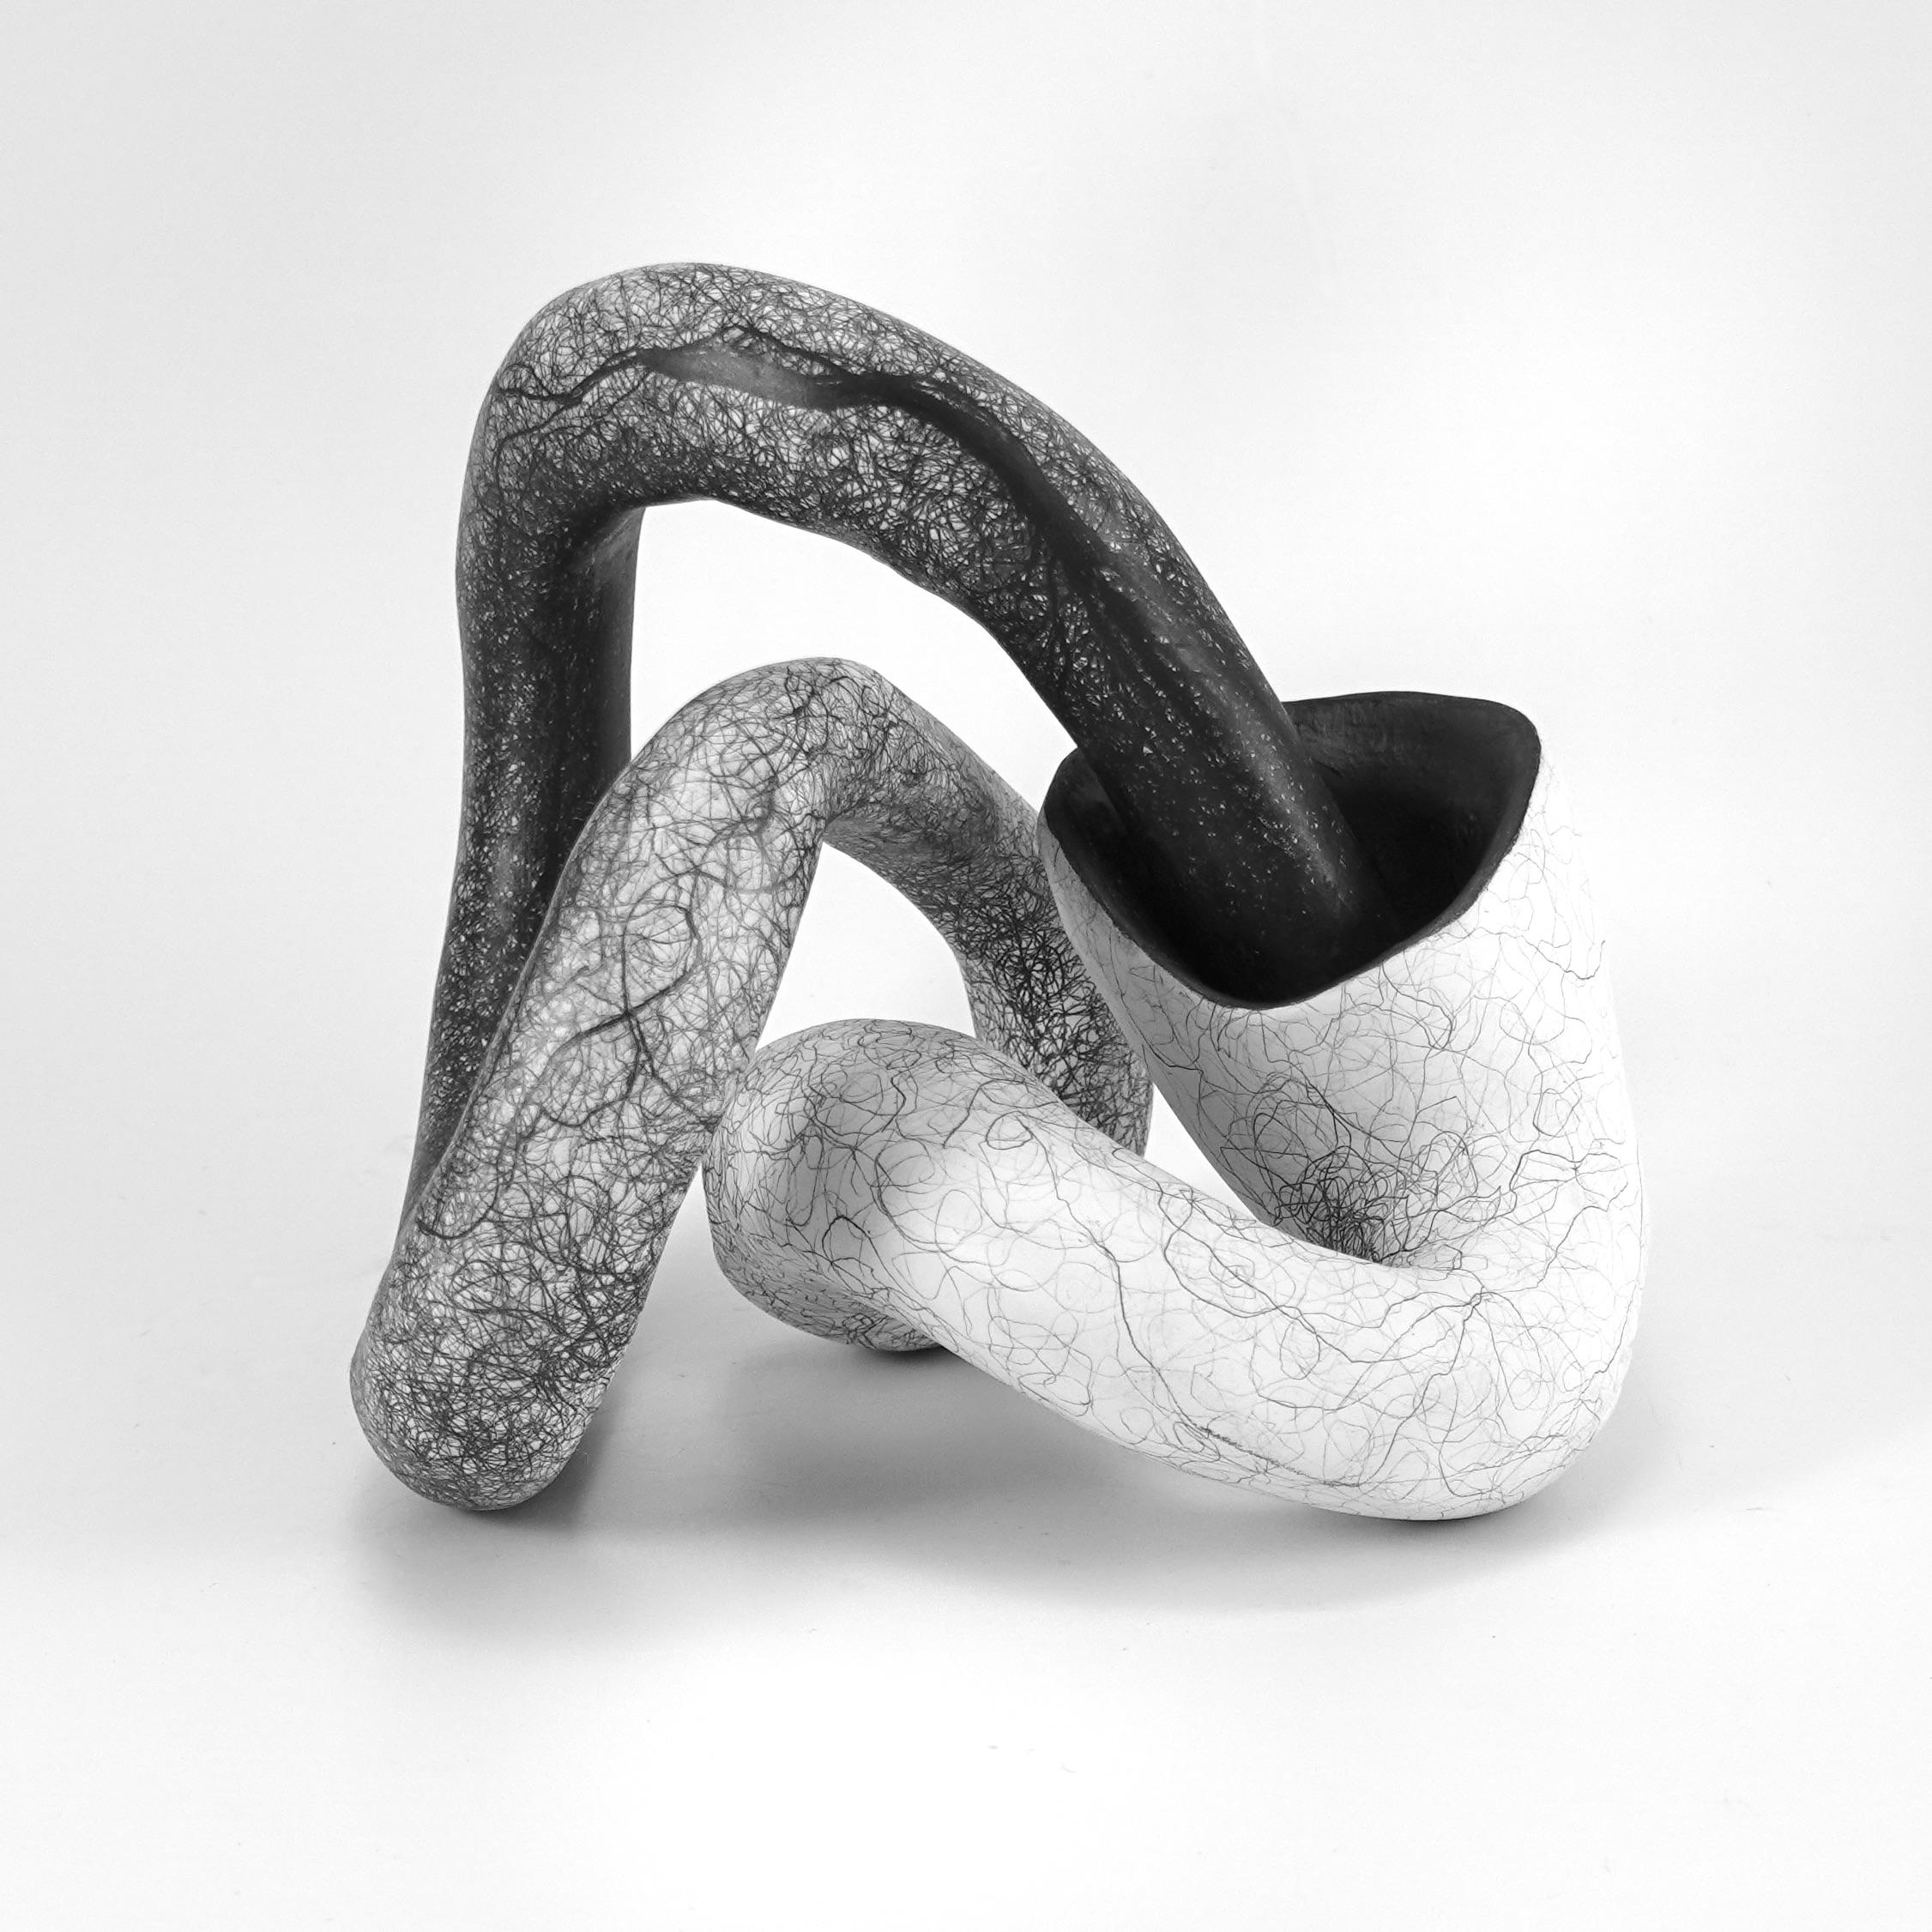 Abstract Sculpture Judi Tavill - Sculpture abstraite minimale en noir et blanc : "Fill" (Remplissage)